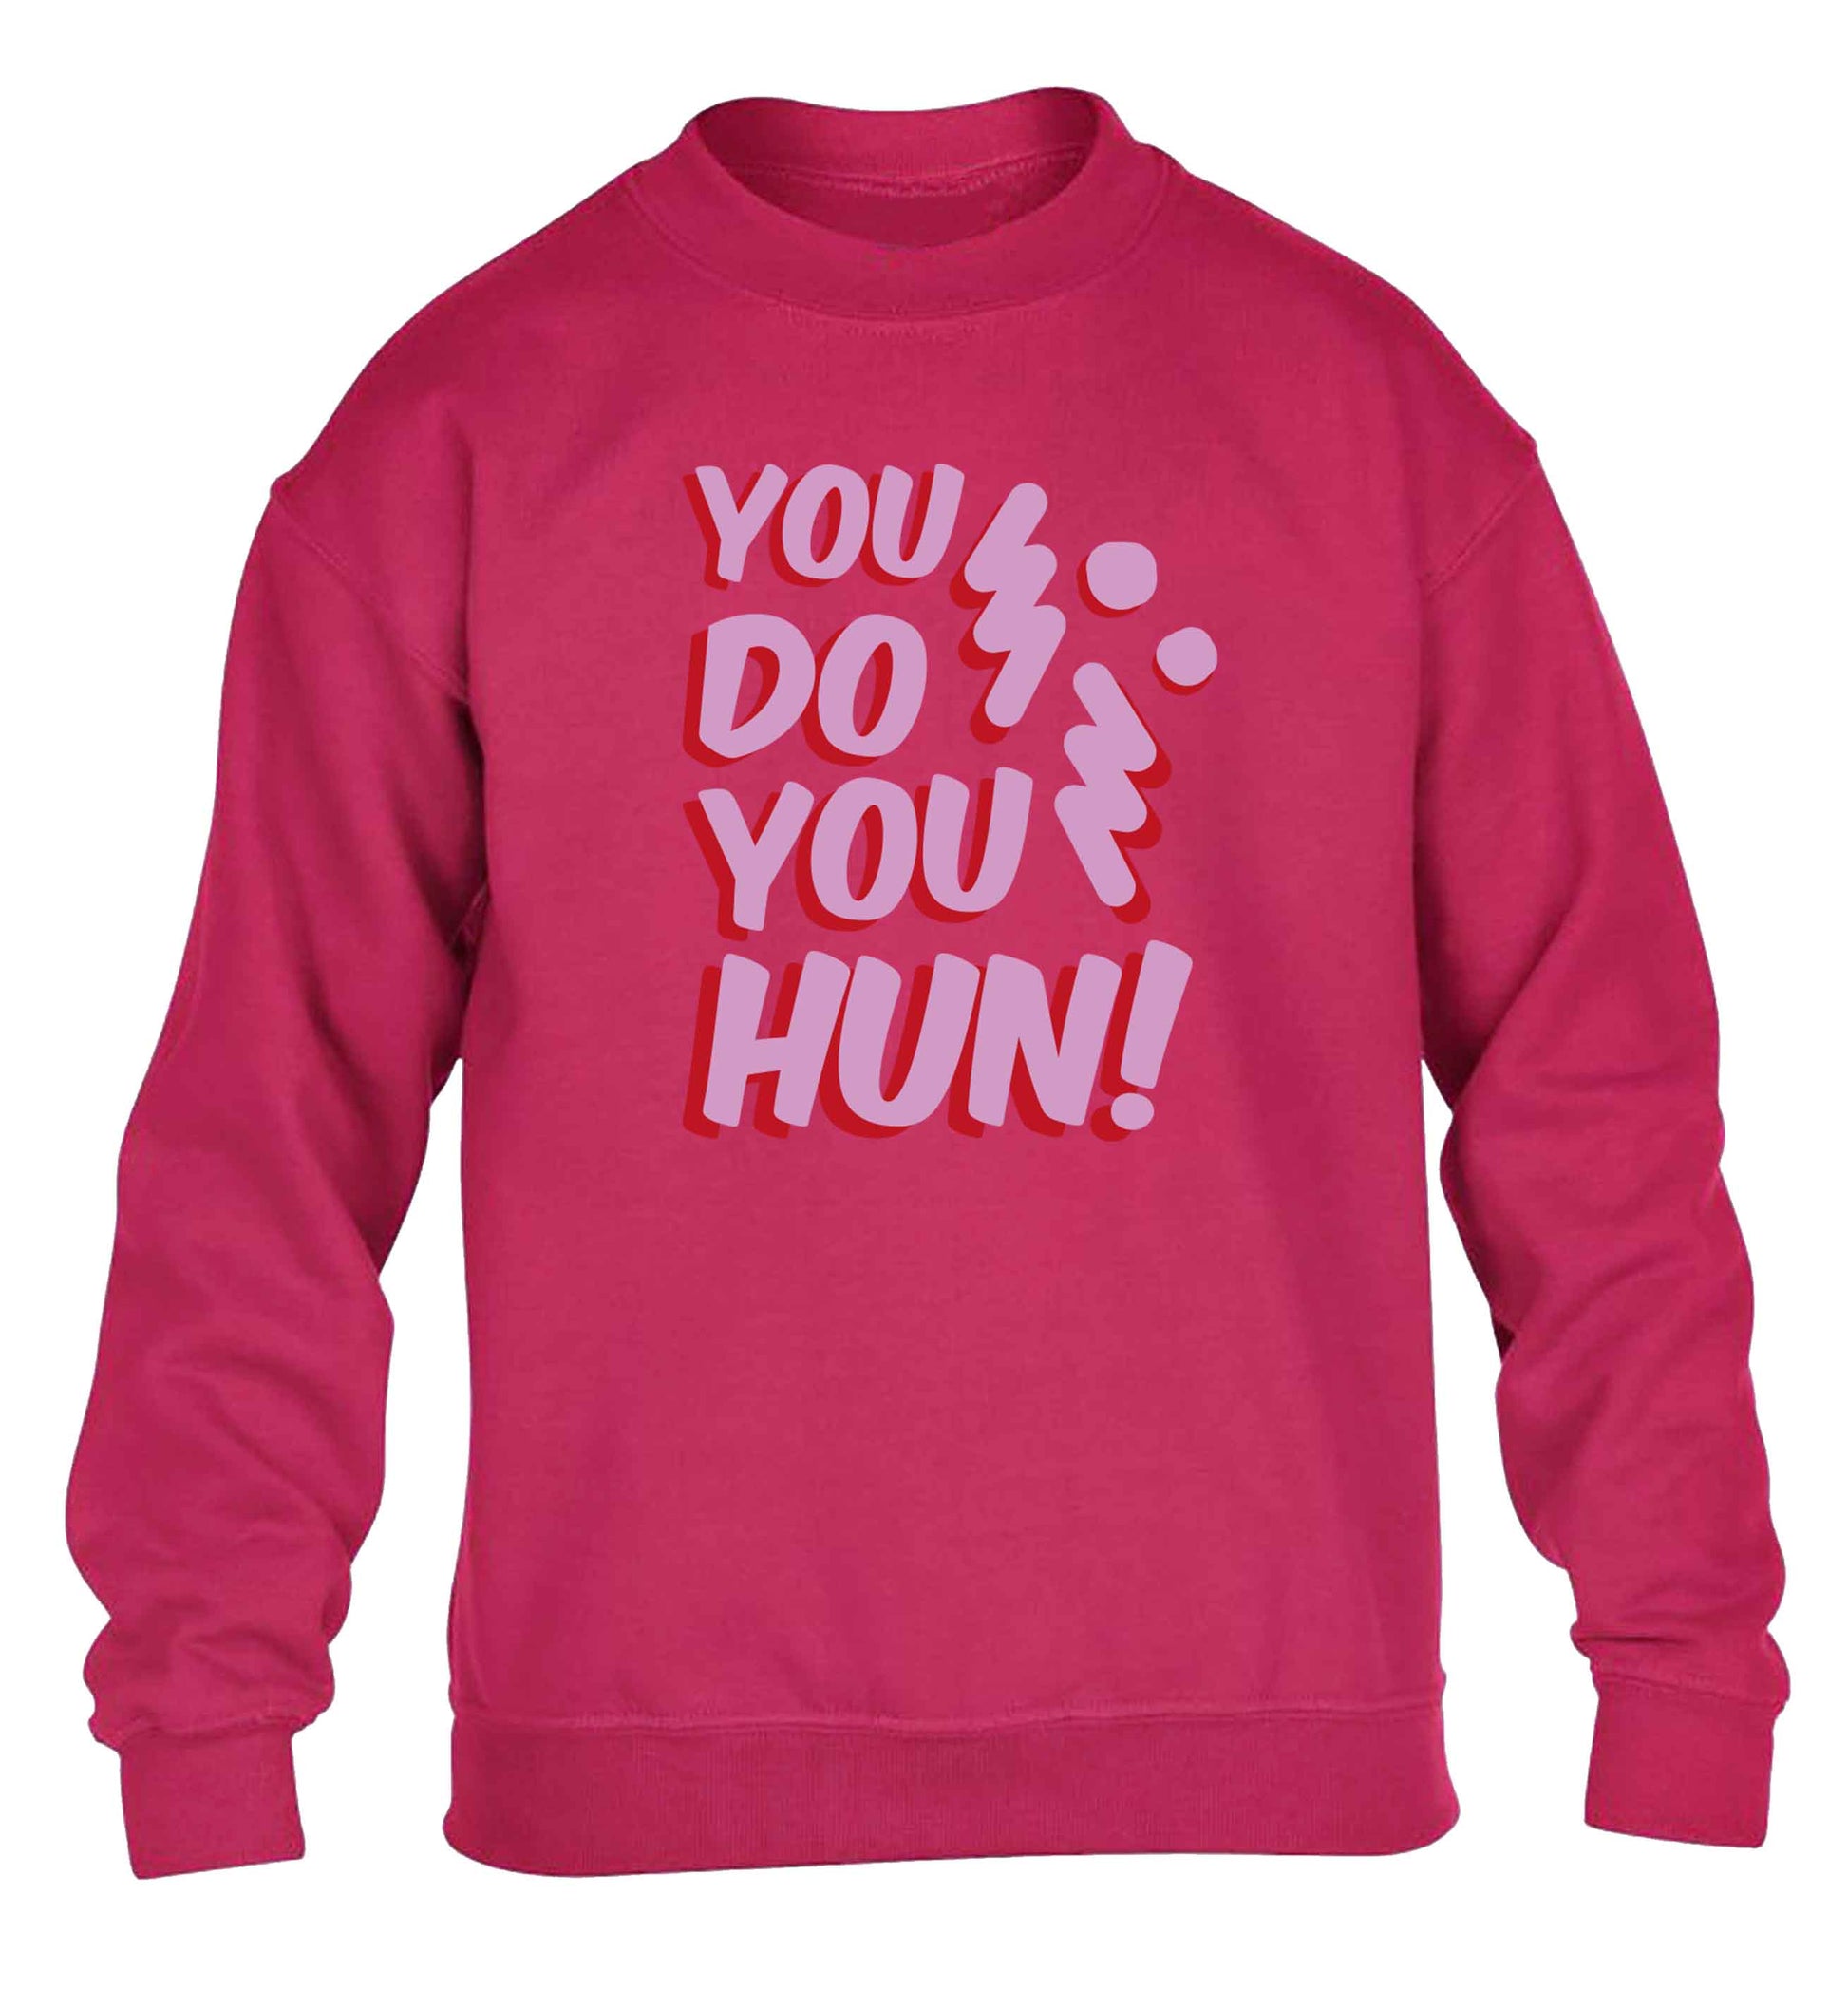 You do you hun children's pink sweater 12-13 Years